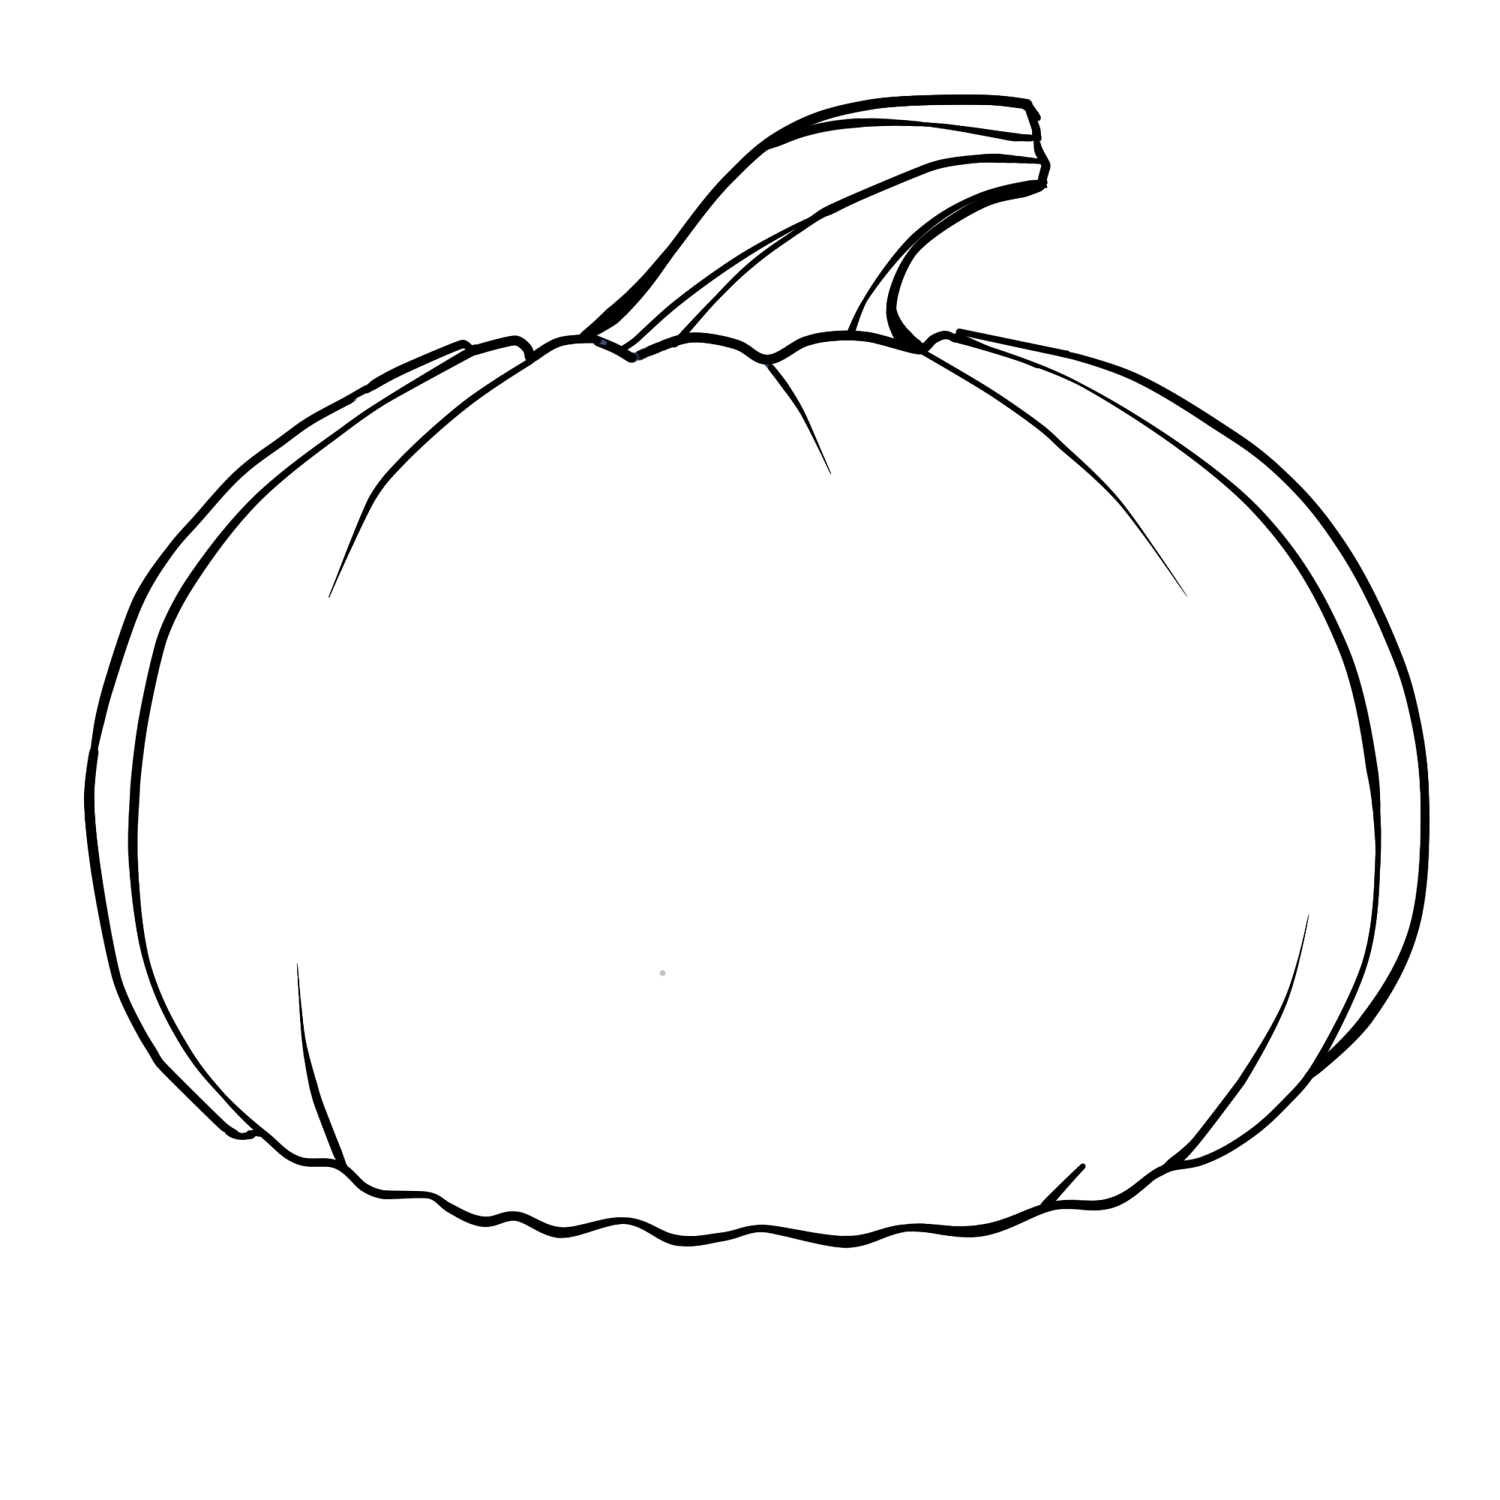 Pix For > Pumpkin Line Drawing